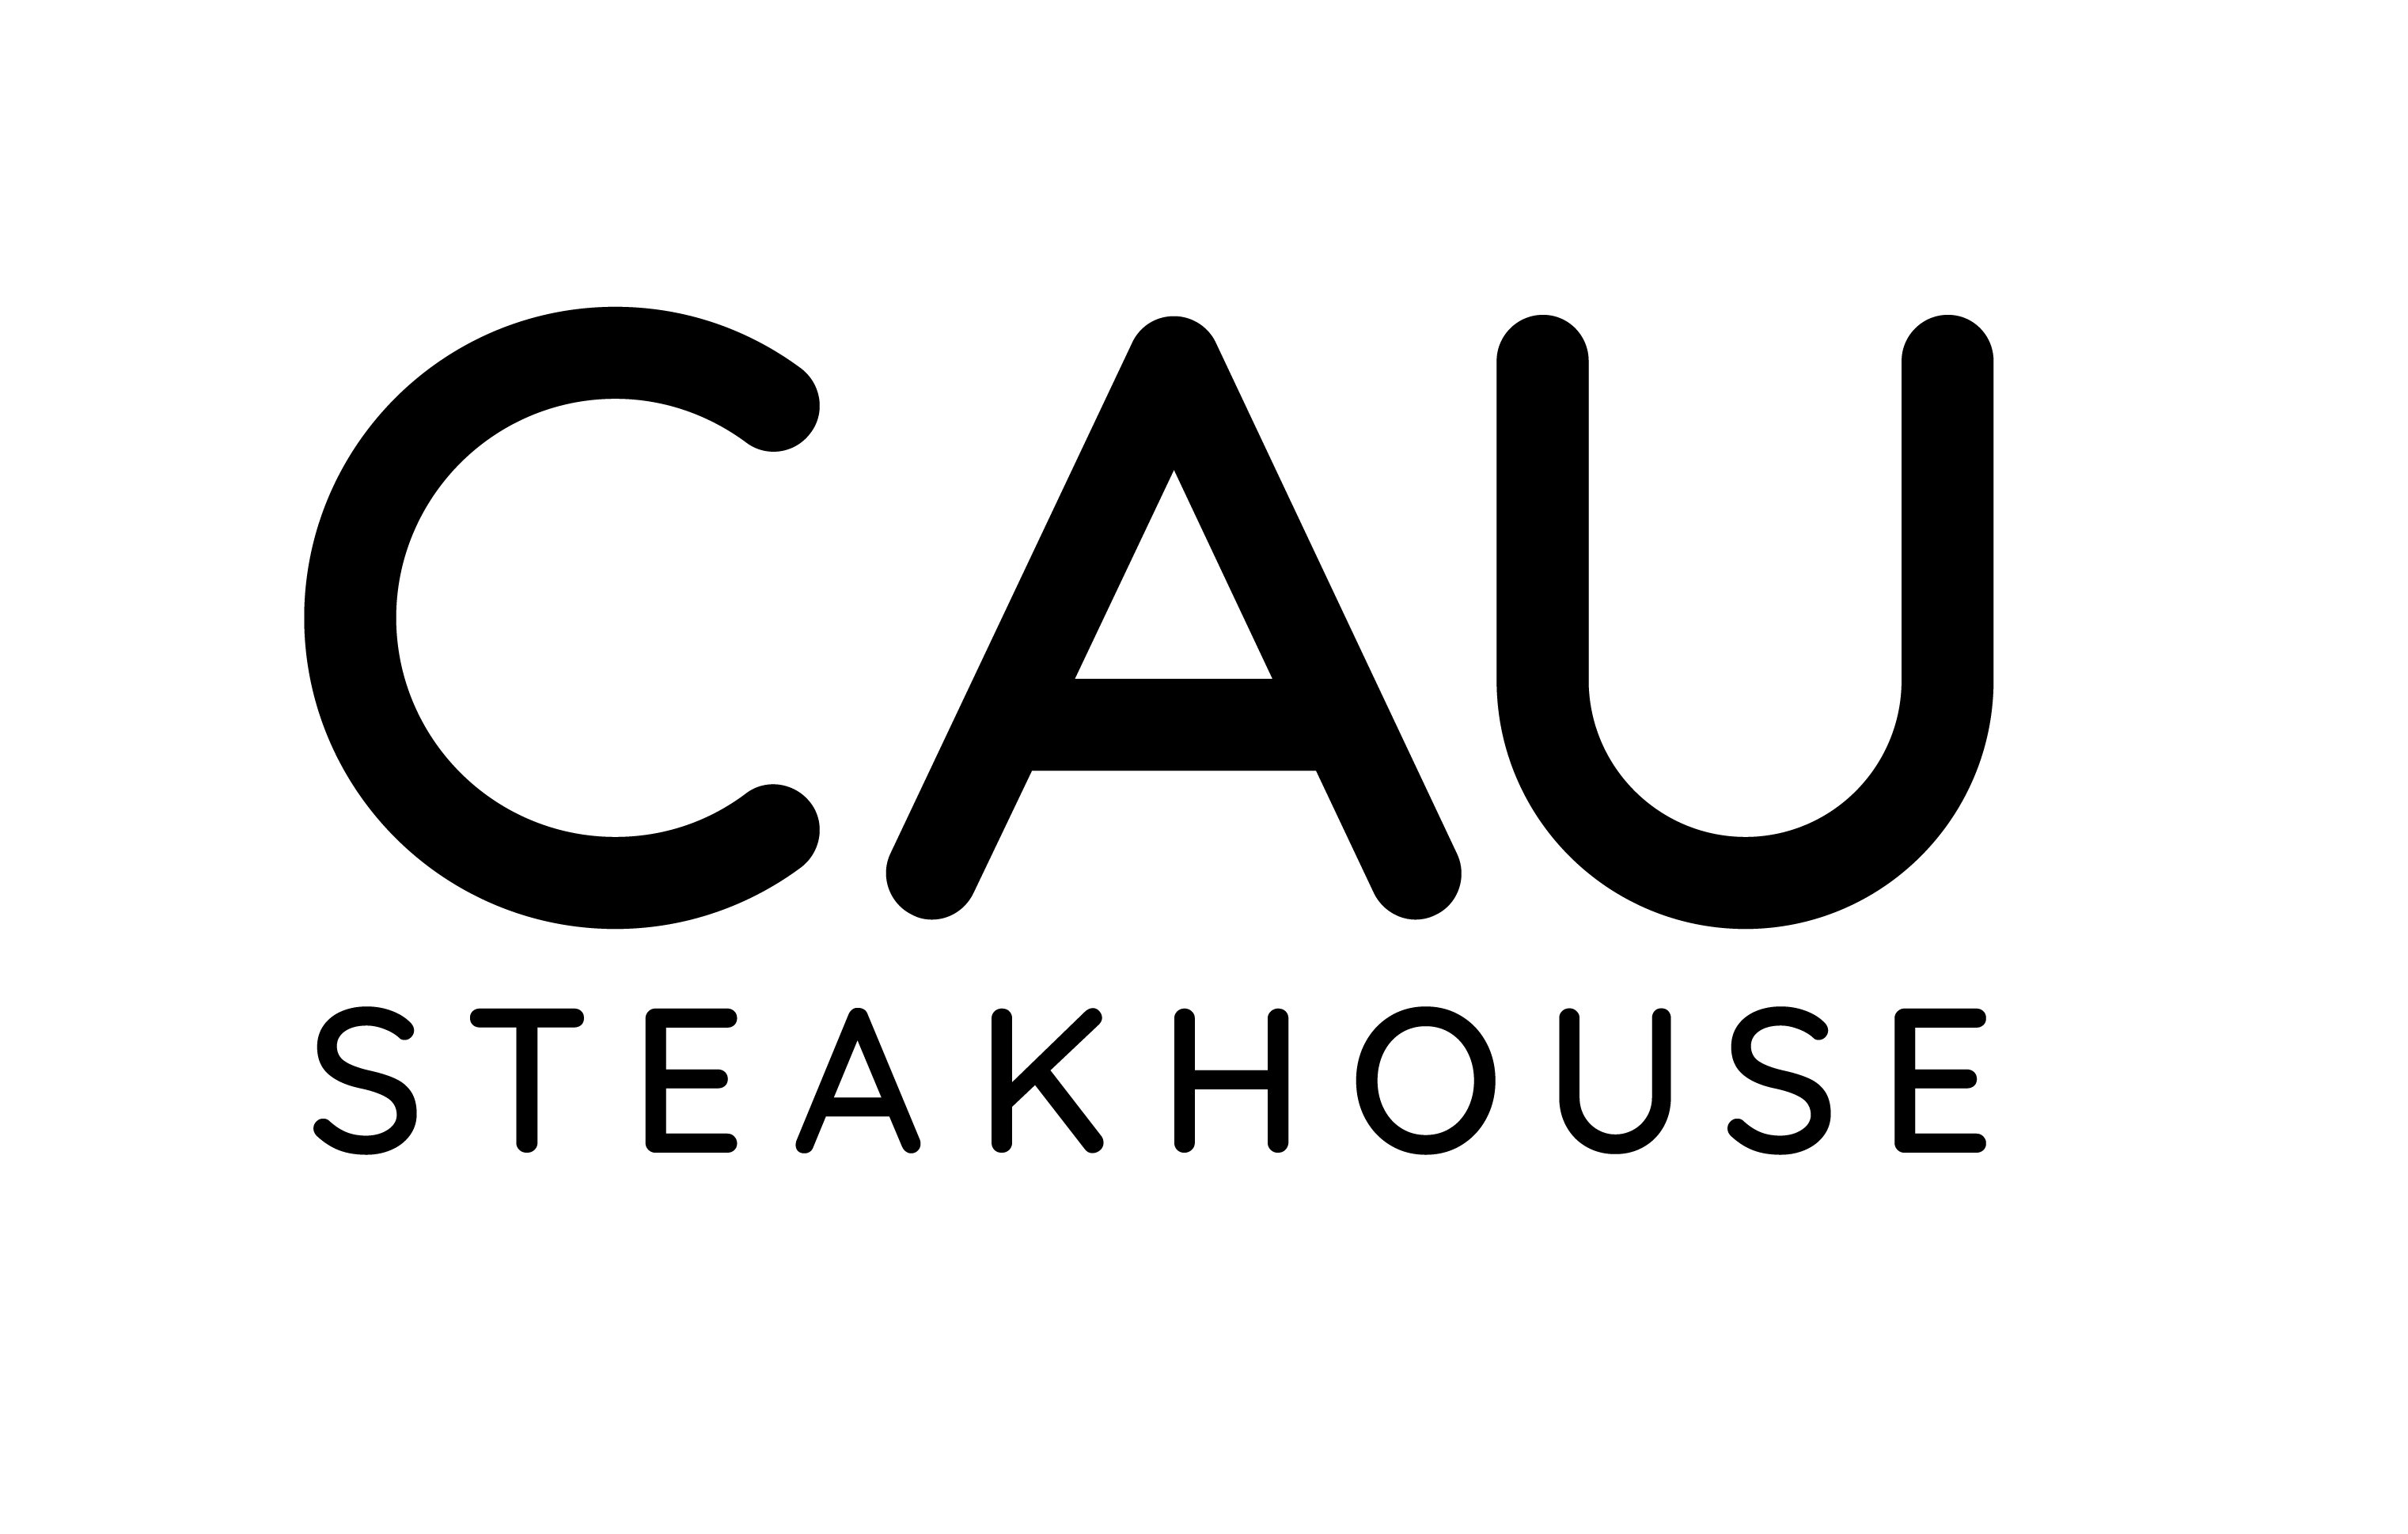 Steakhouse Logo - CAU Steakhouse Amsterdam